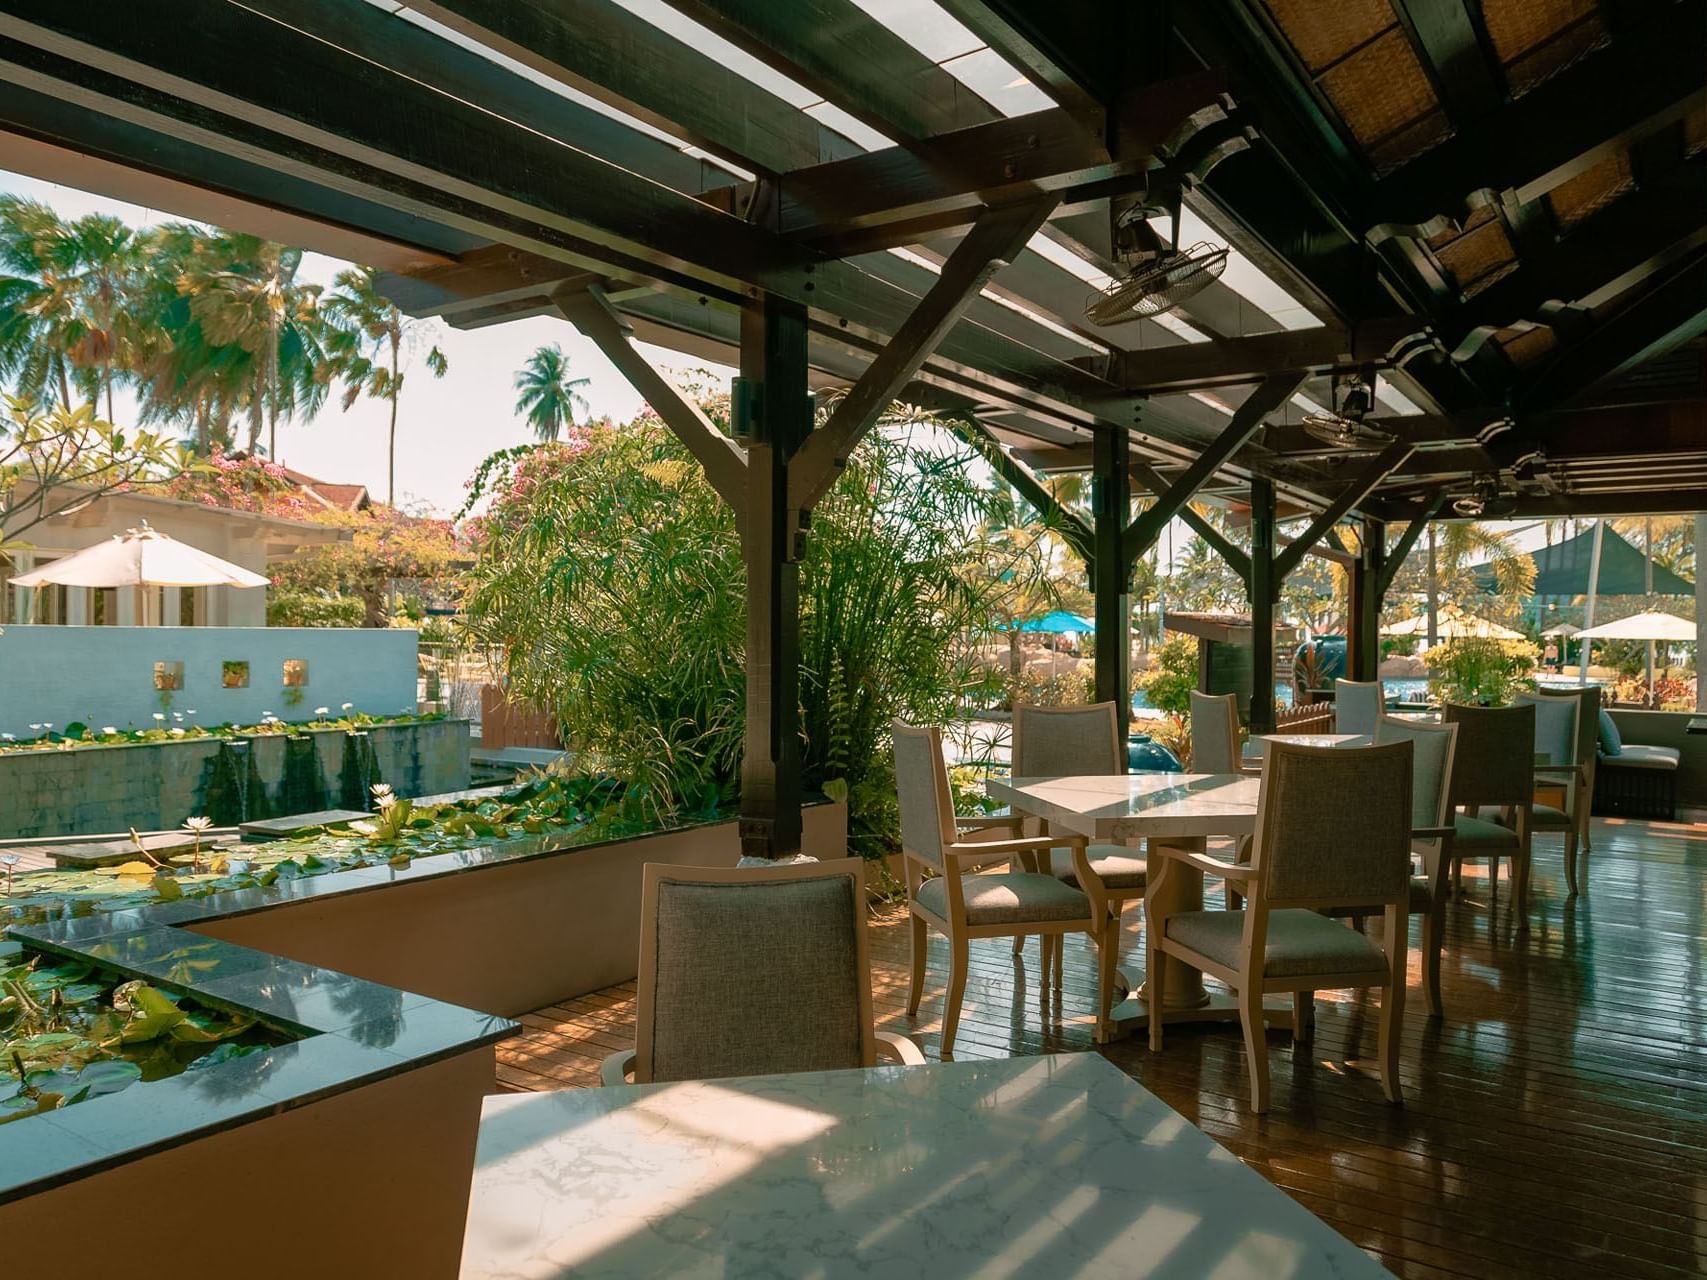 Table arrangements in The Club at Pelangi Beach Resort & Spa